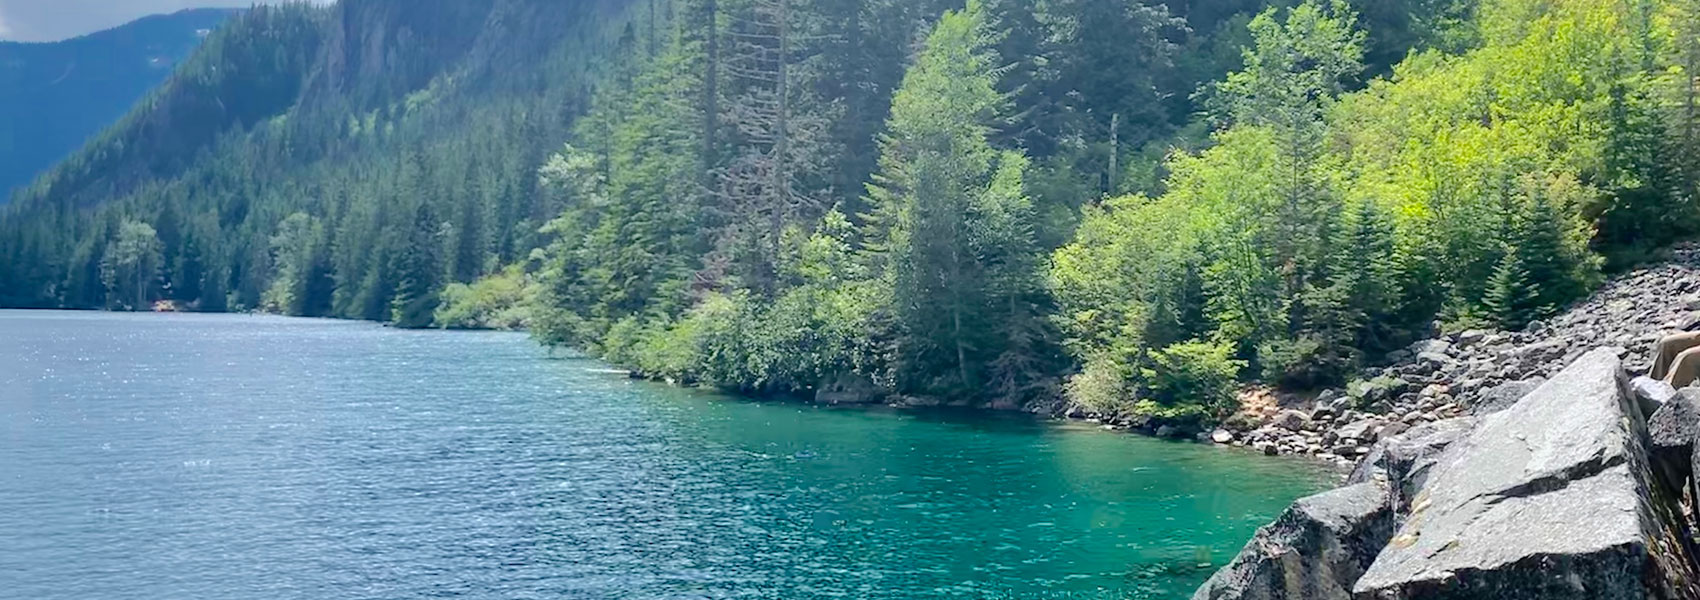 Lindeman Lake, Fraser Valley, British Columbia, Canada